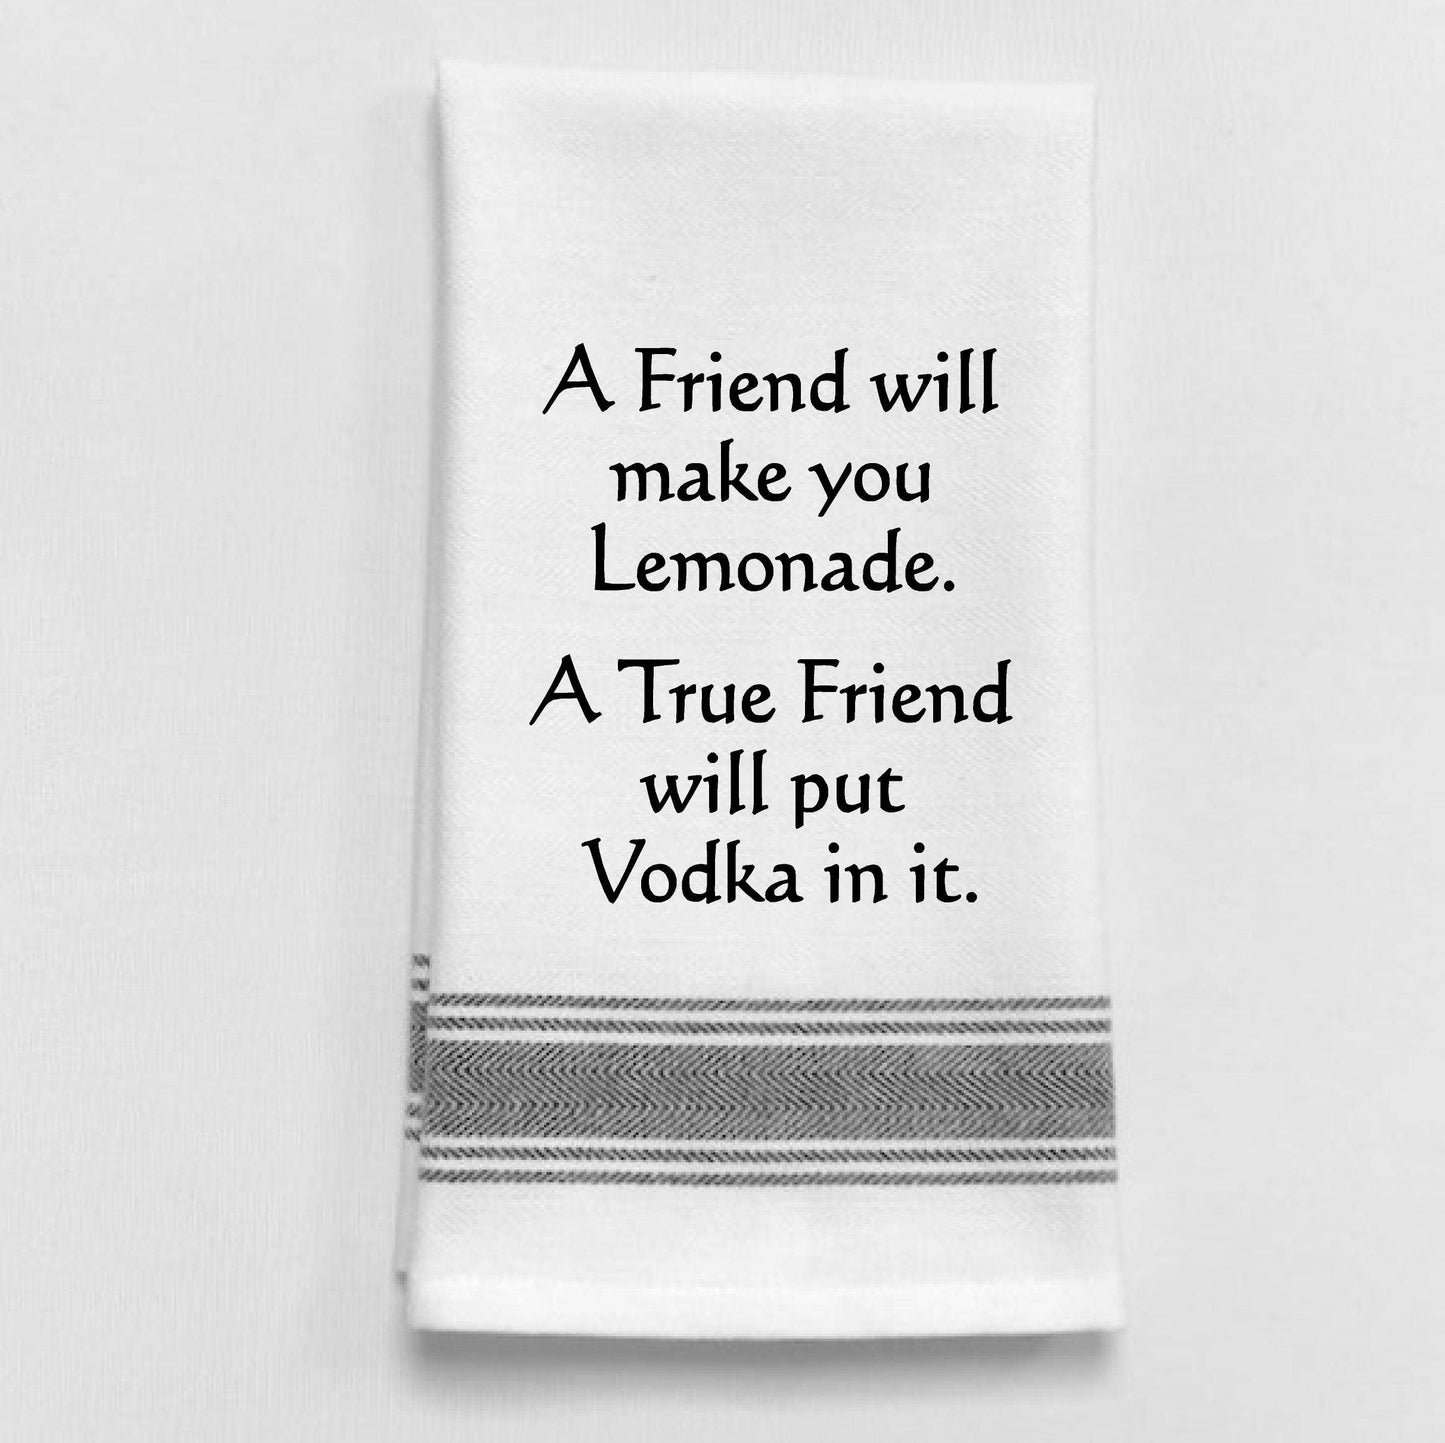 A friend will make your lemonade. A true friend...